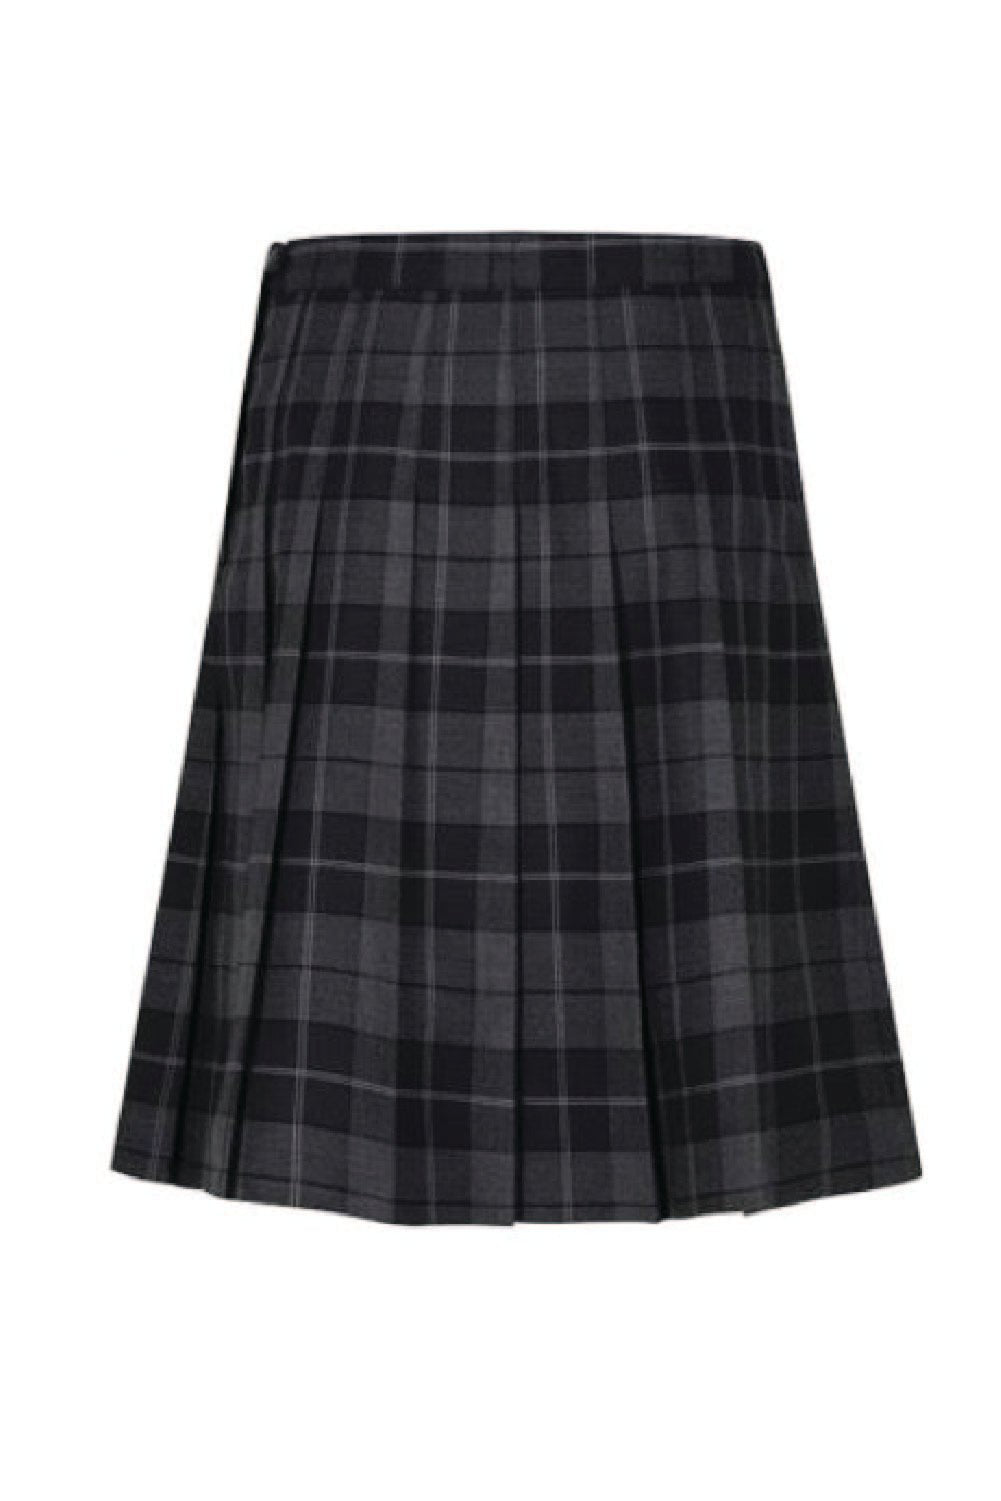 Hassenbrook School Custom Skirt - Uniformwise Schoolwear